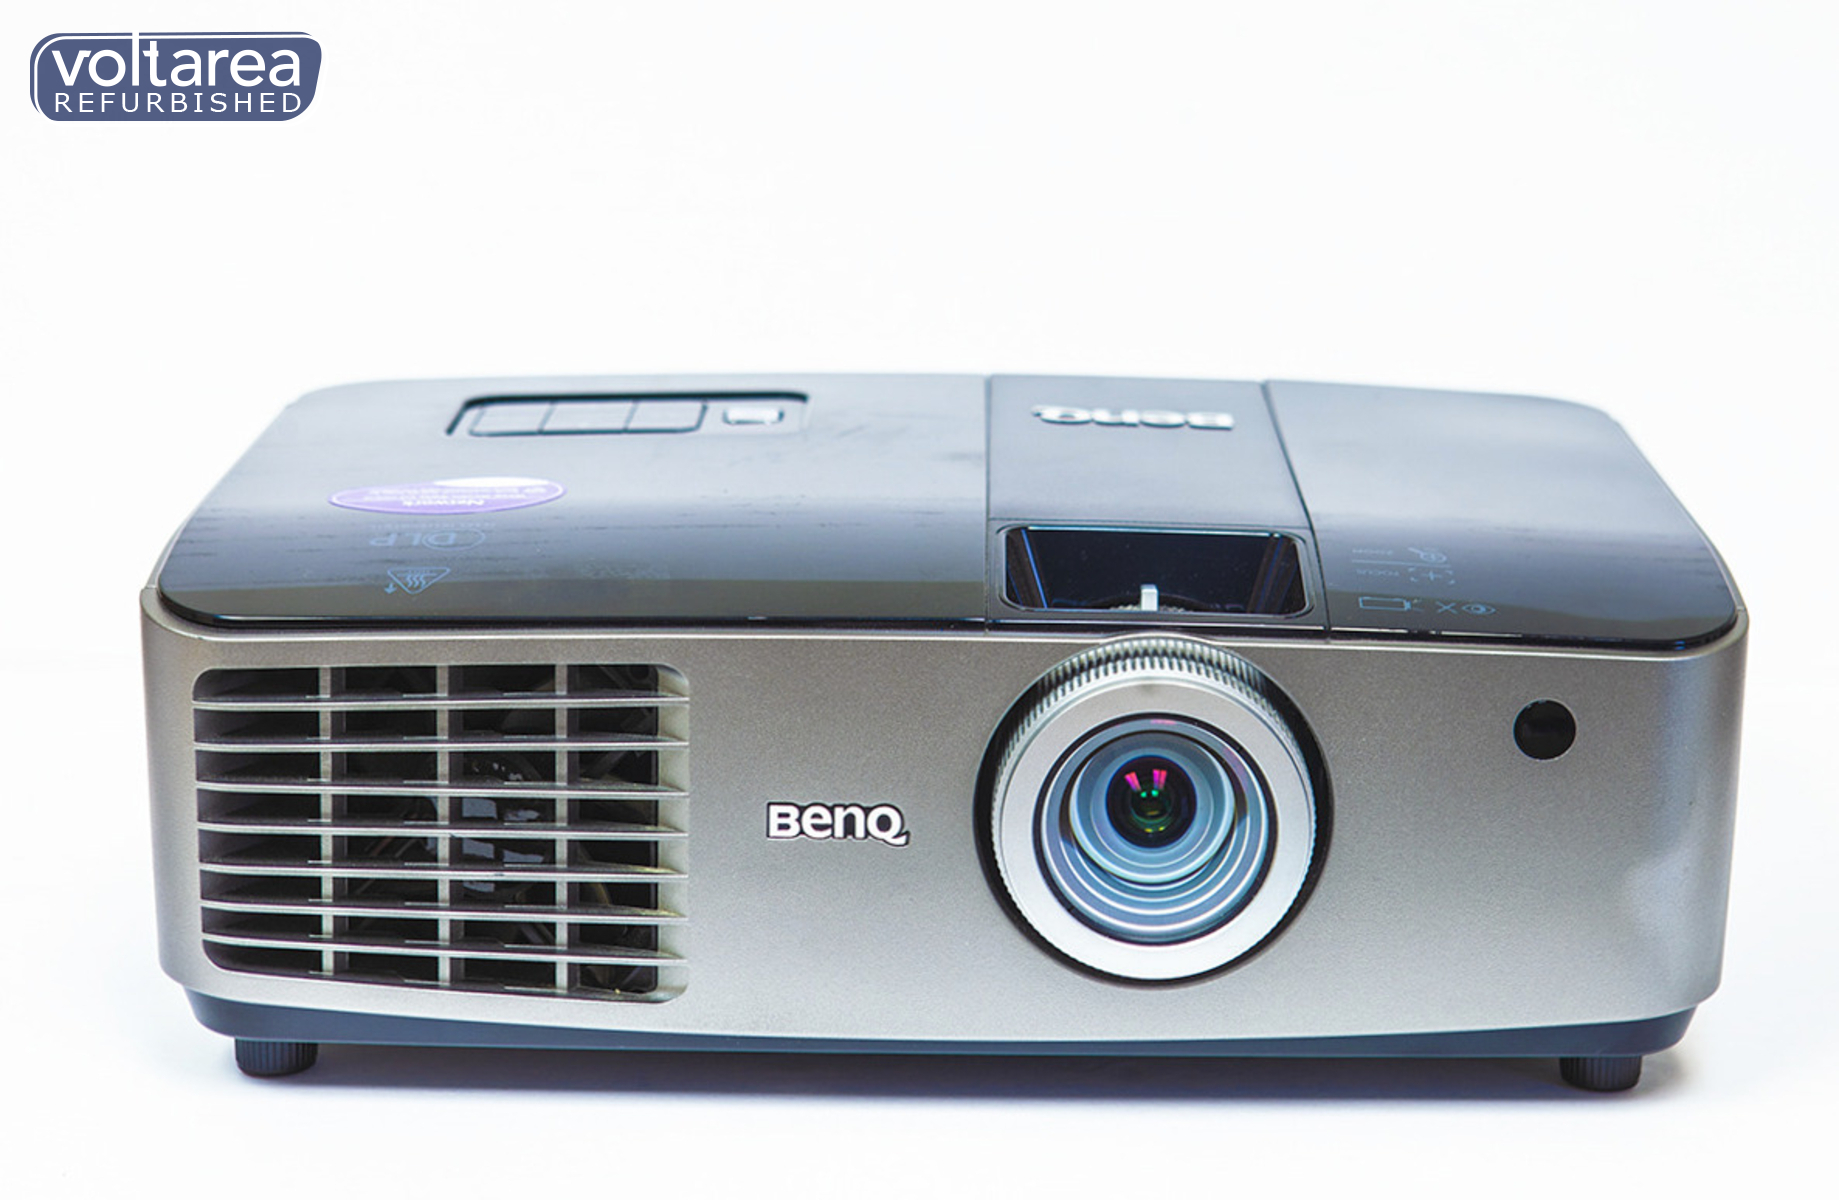 BenQ MX764 Projector REFURBISHED